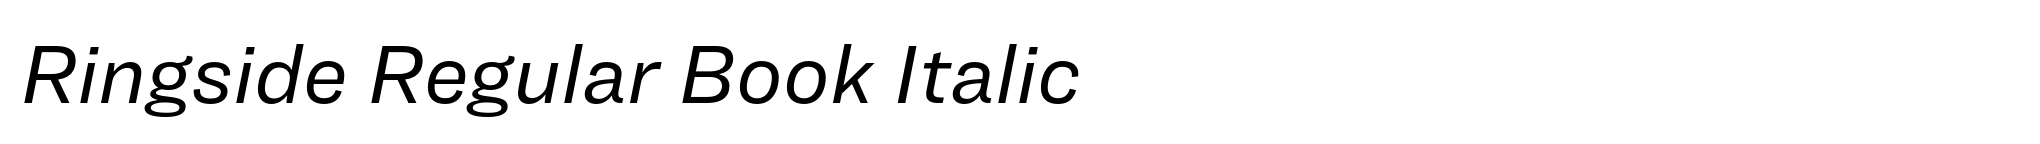 Ringside Regular Book Italic image